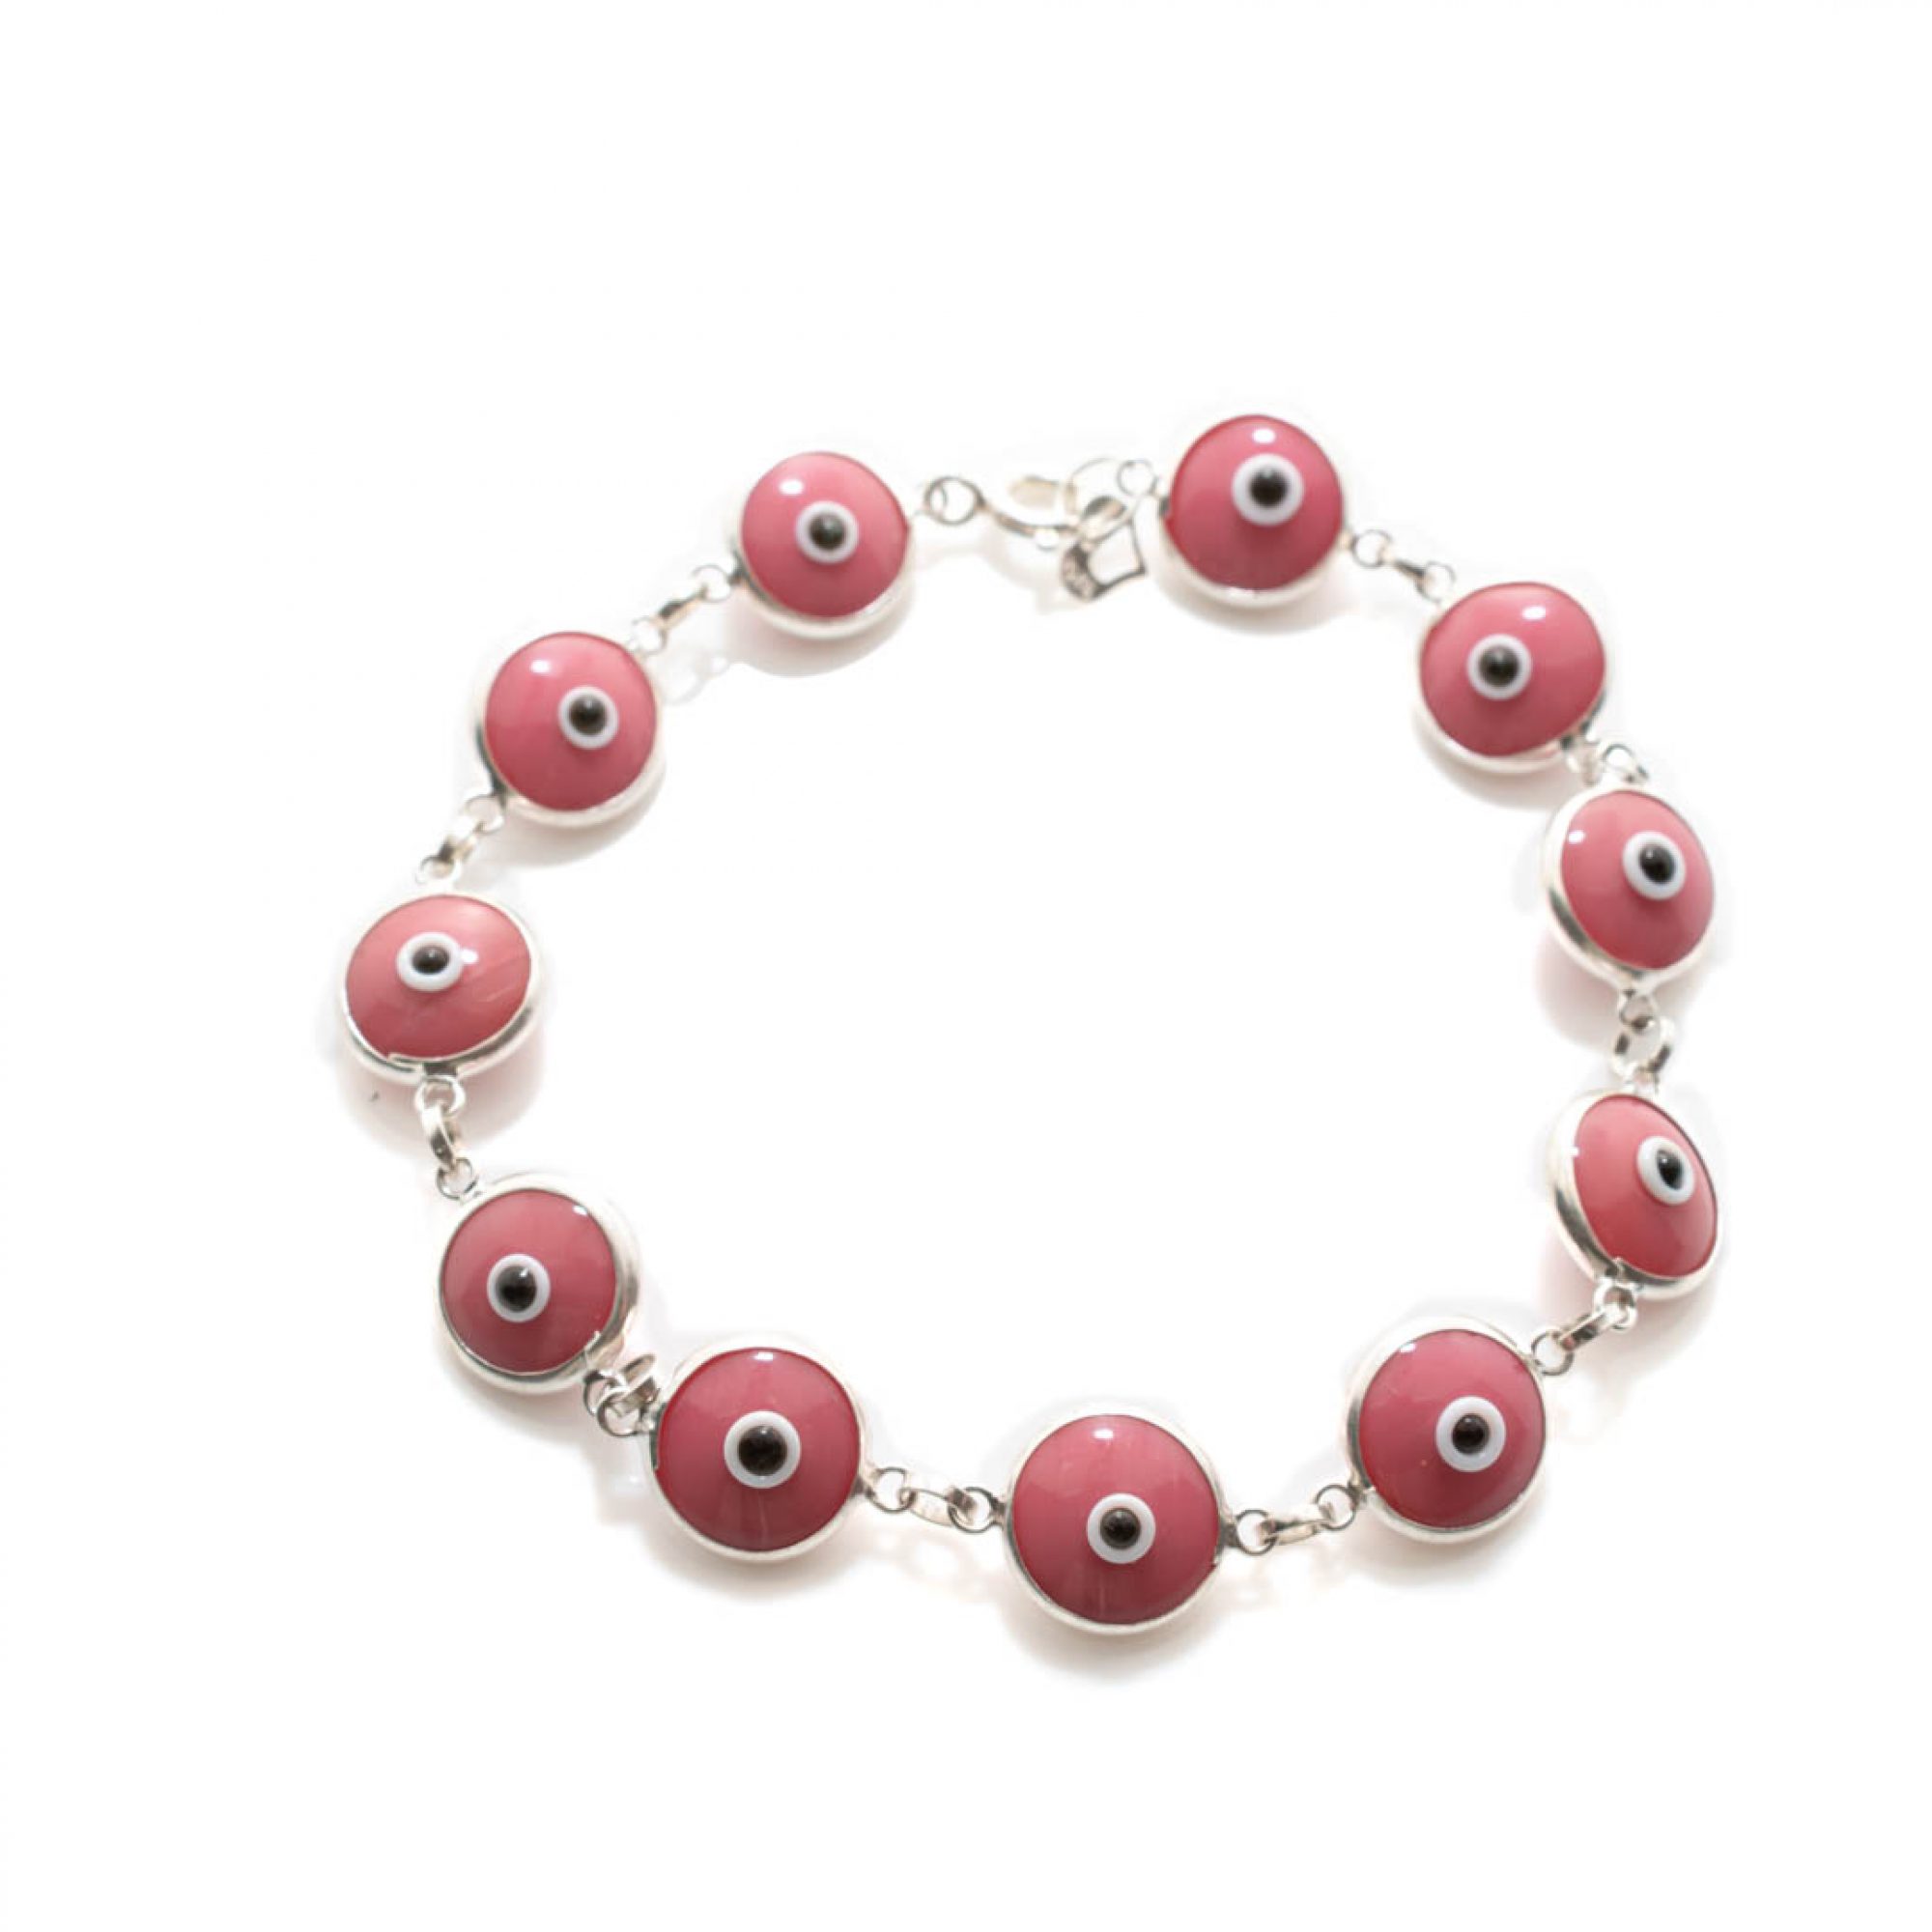 Eye bracelet with pink stones